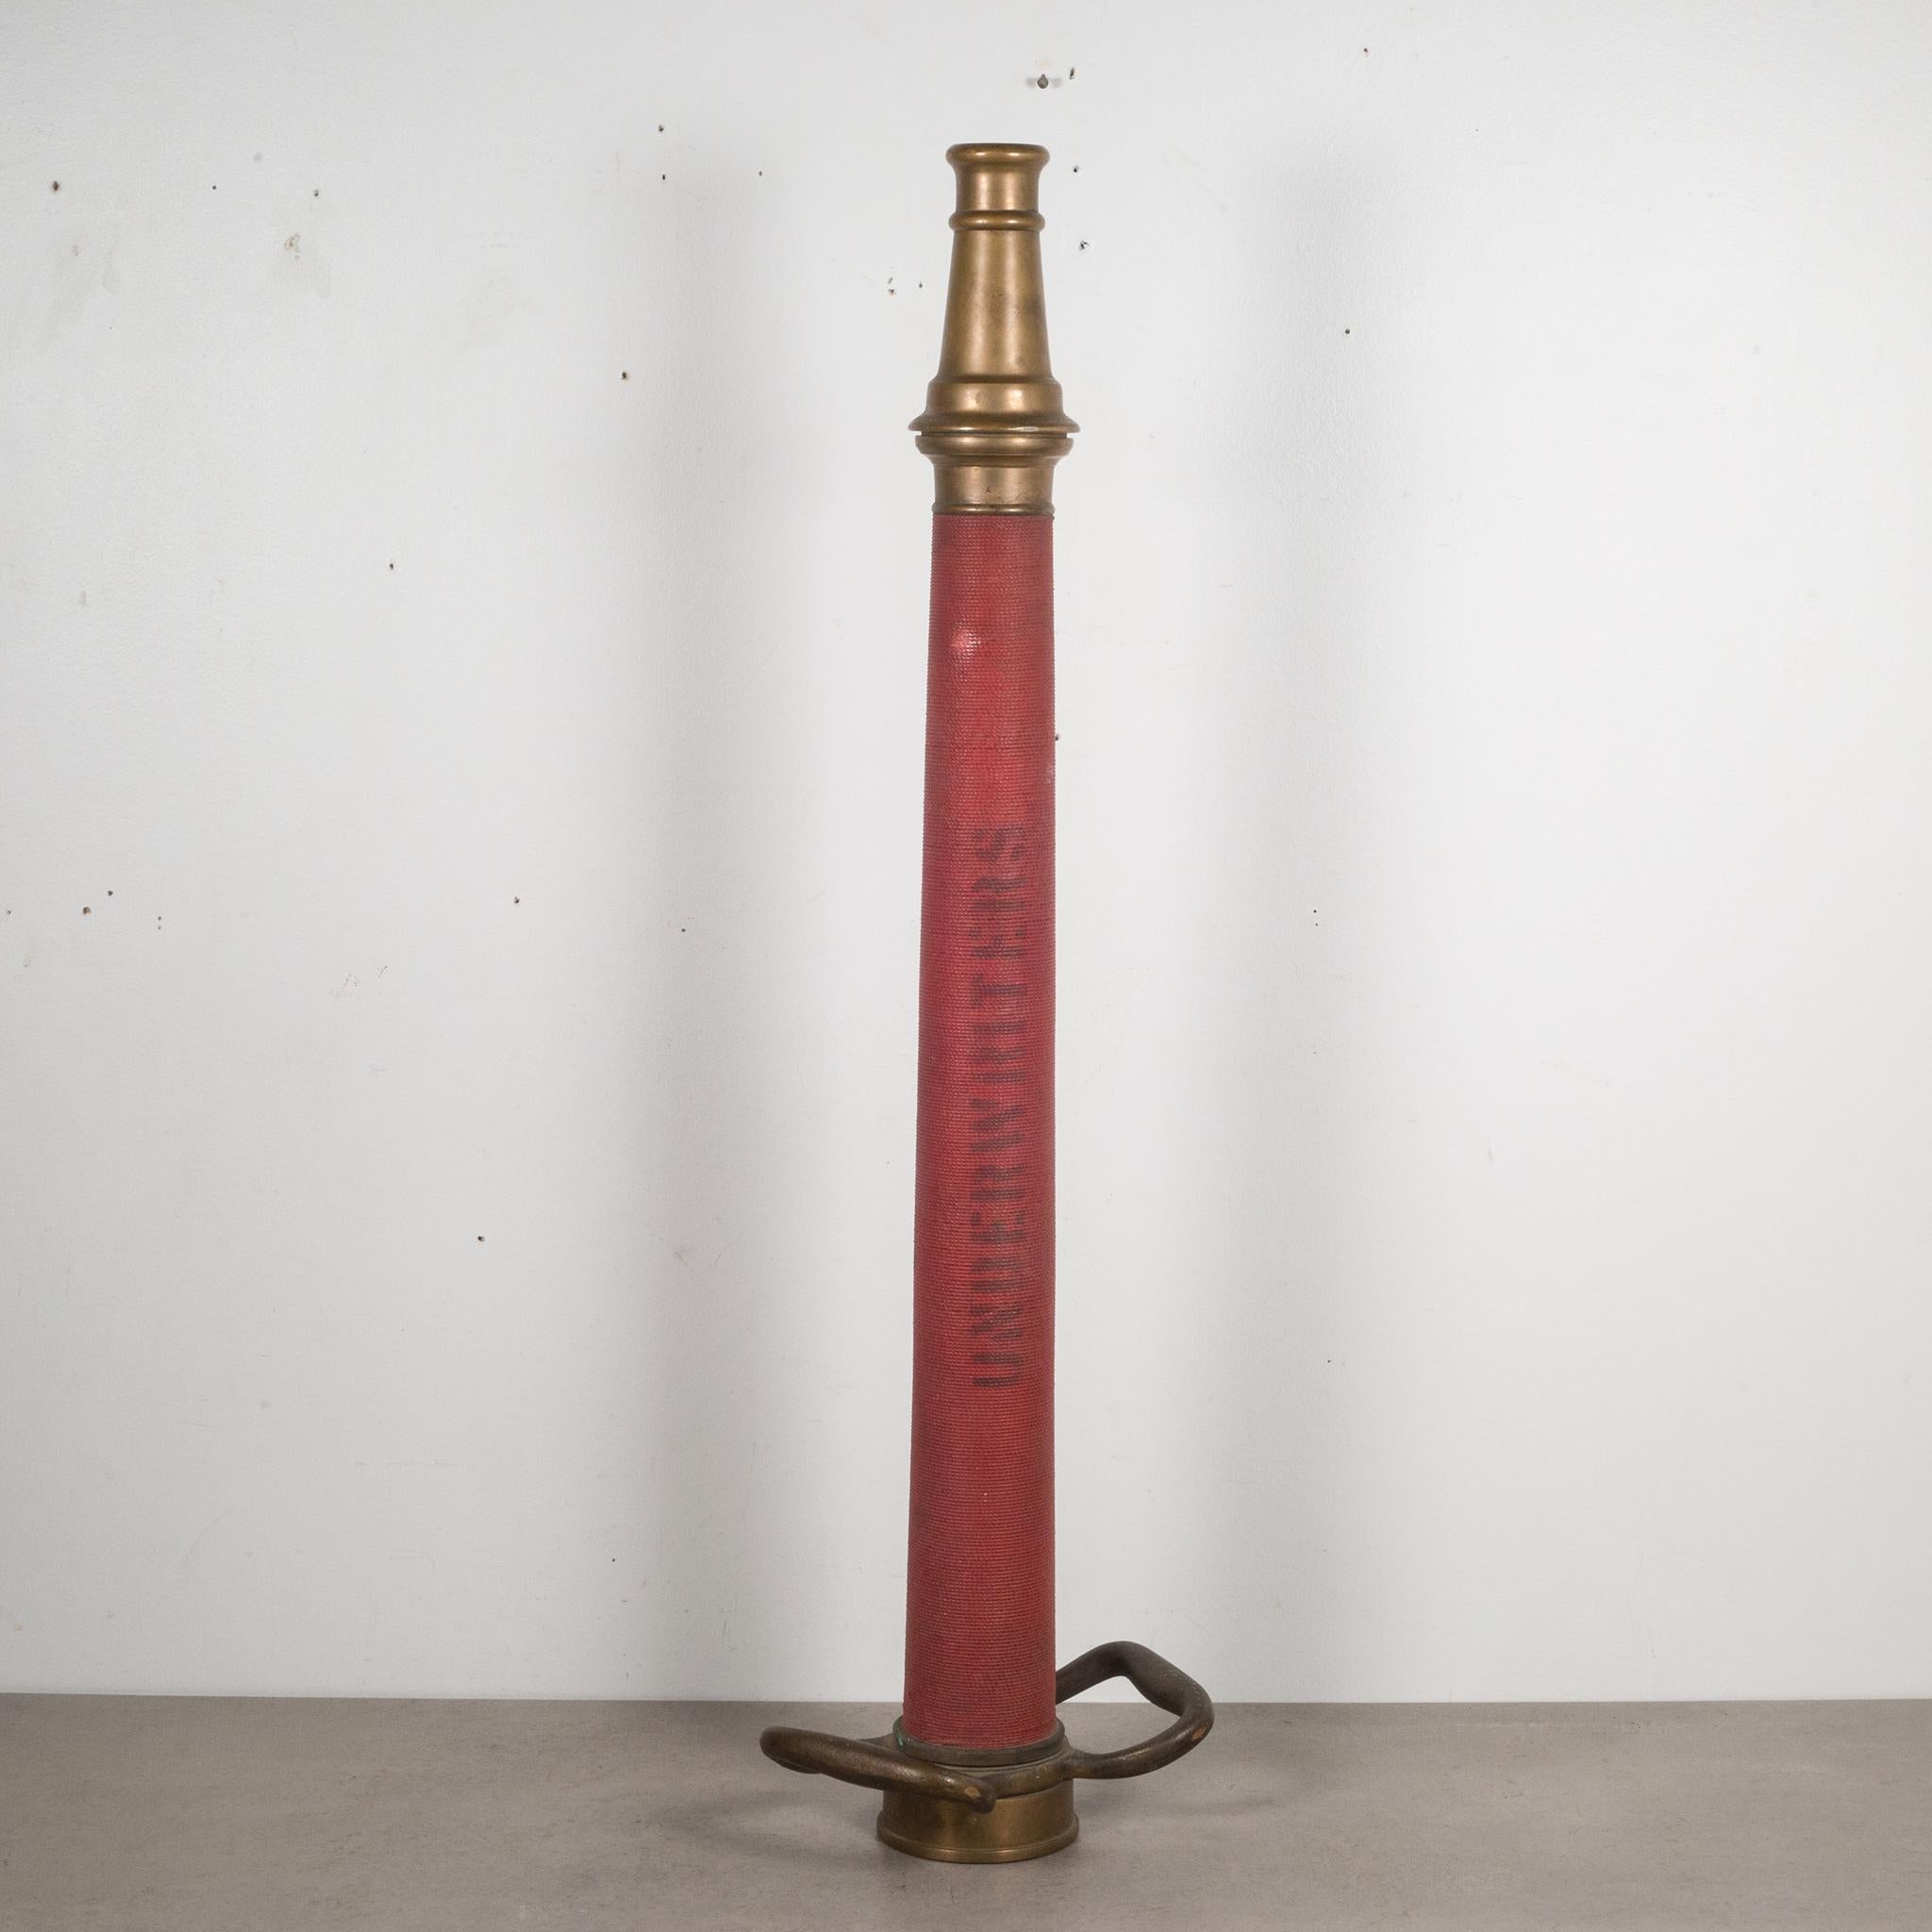 American Antique Solid Brass Fire Hose Nozzle, c.1900